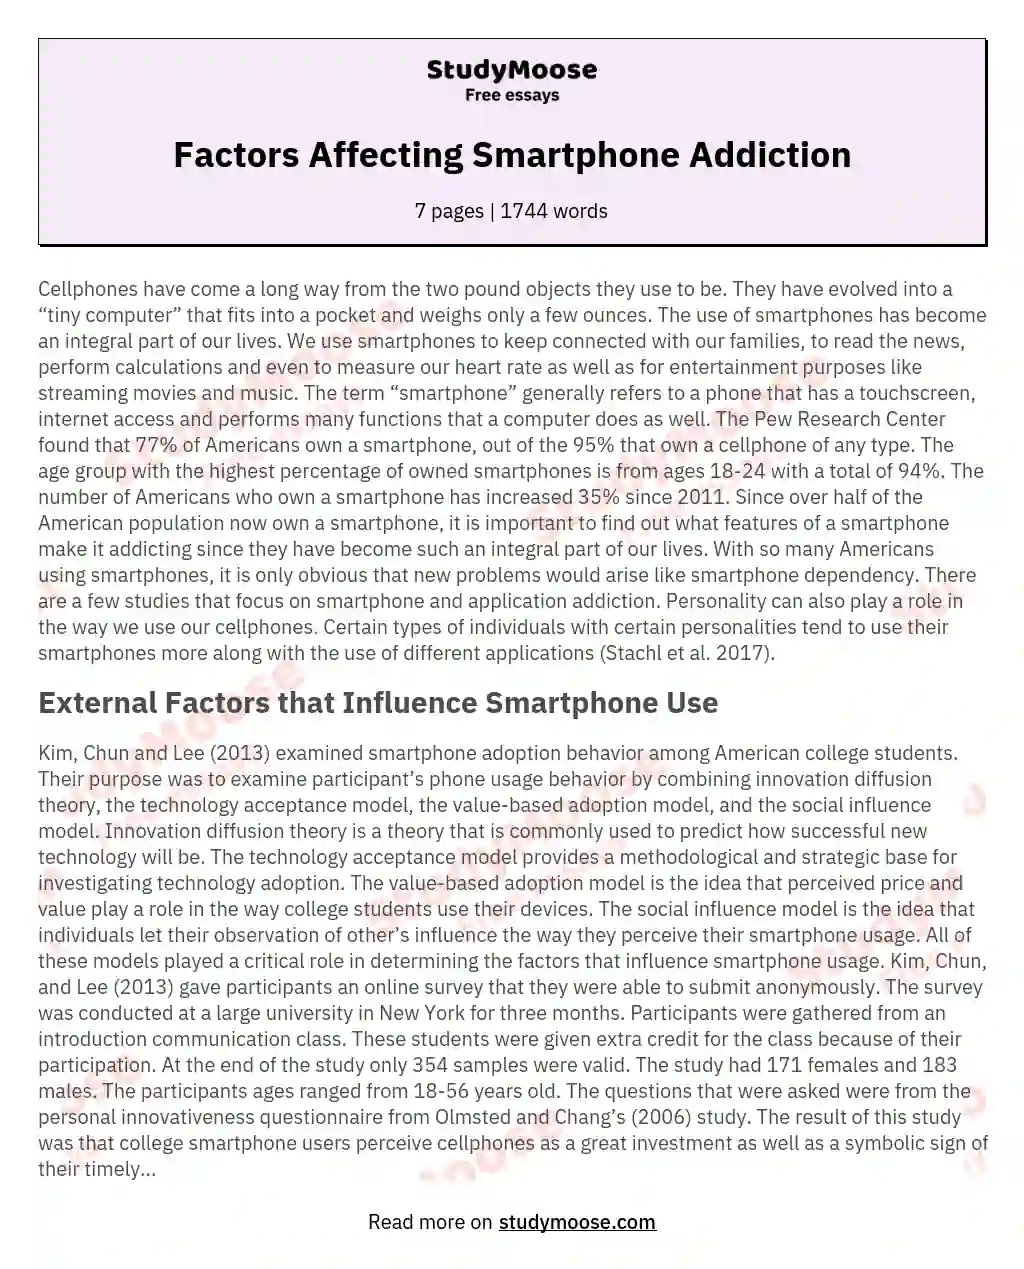 Factors Affecting Smartphone Addiction essay